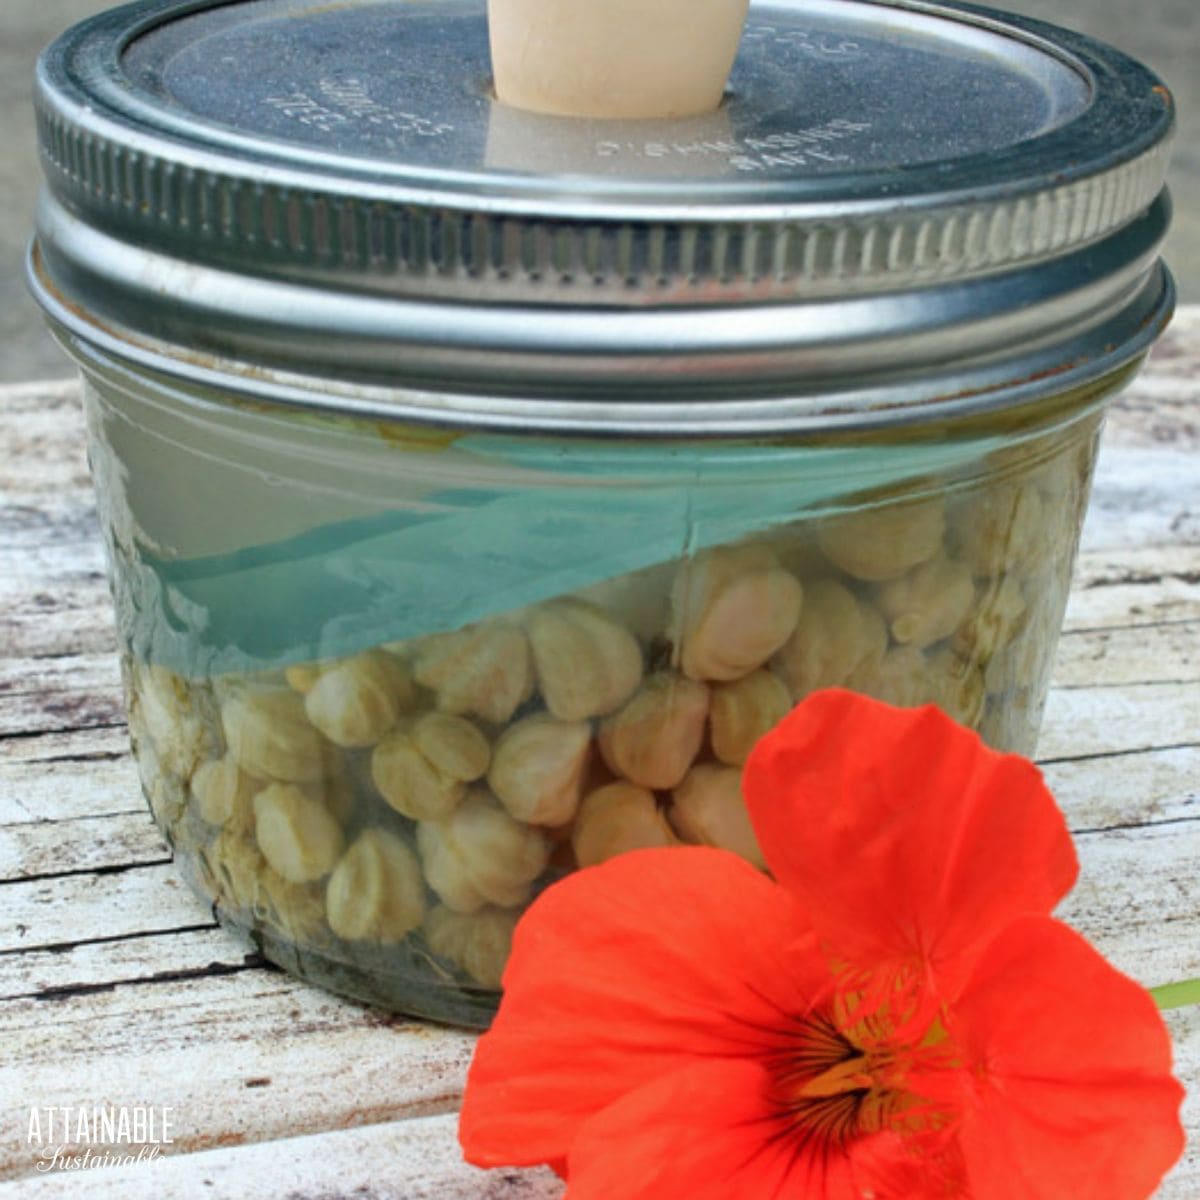 nasturtium seeds fermenting in a small jar with an orange nasturtium flower in the foreground.